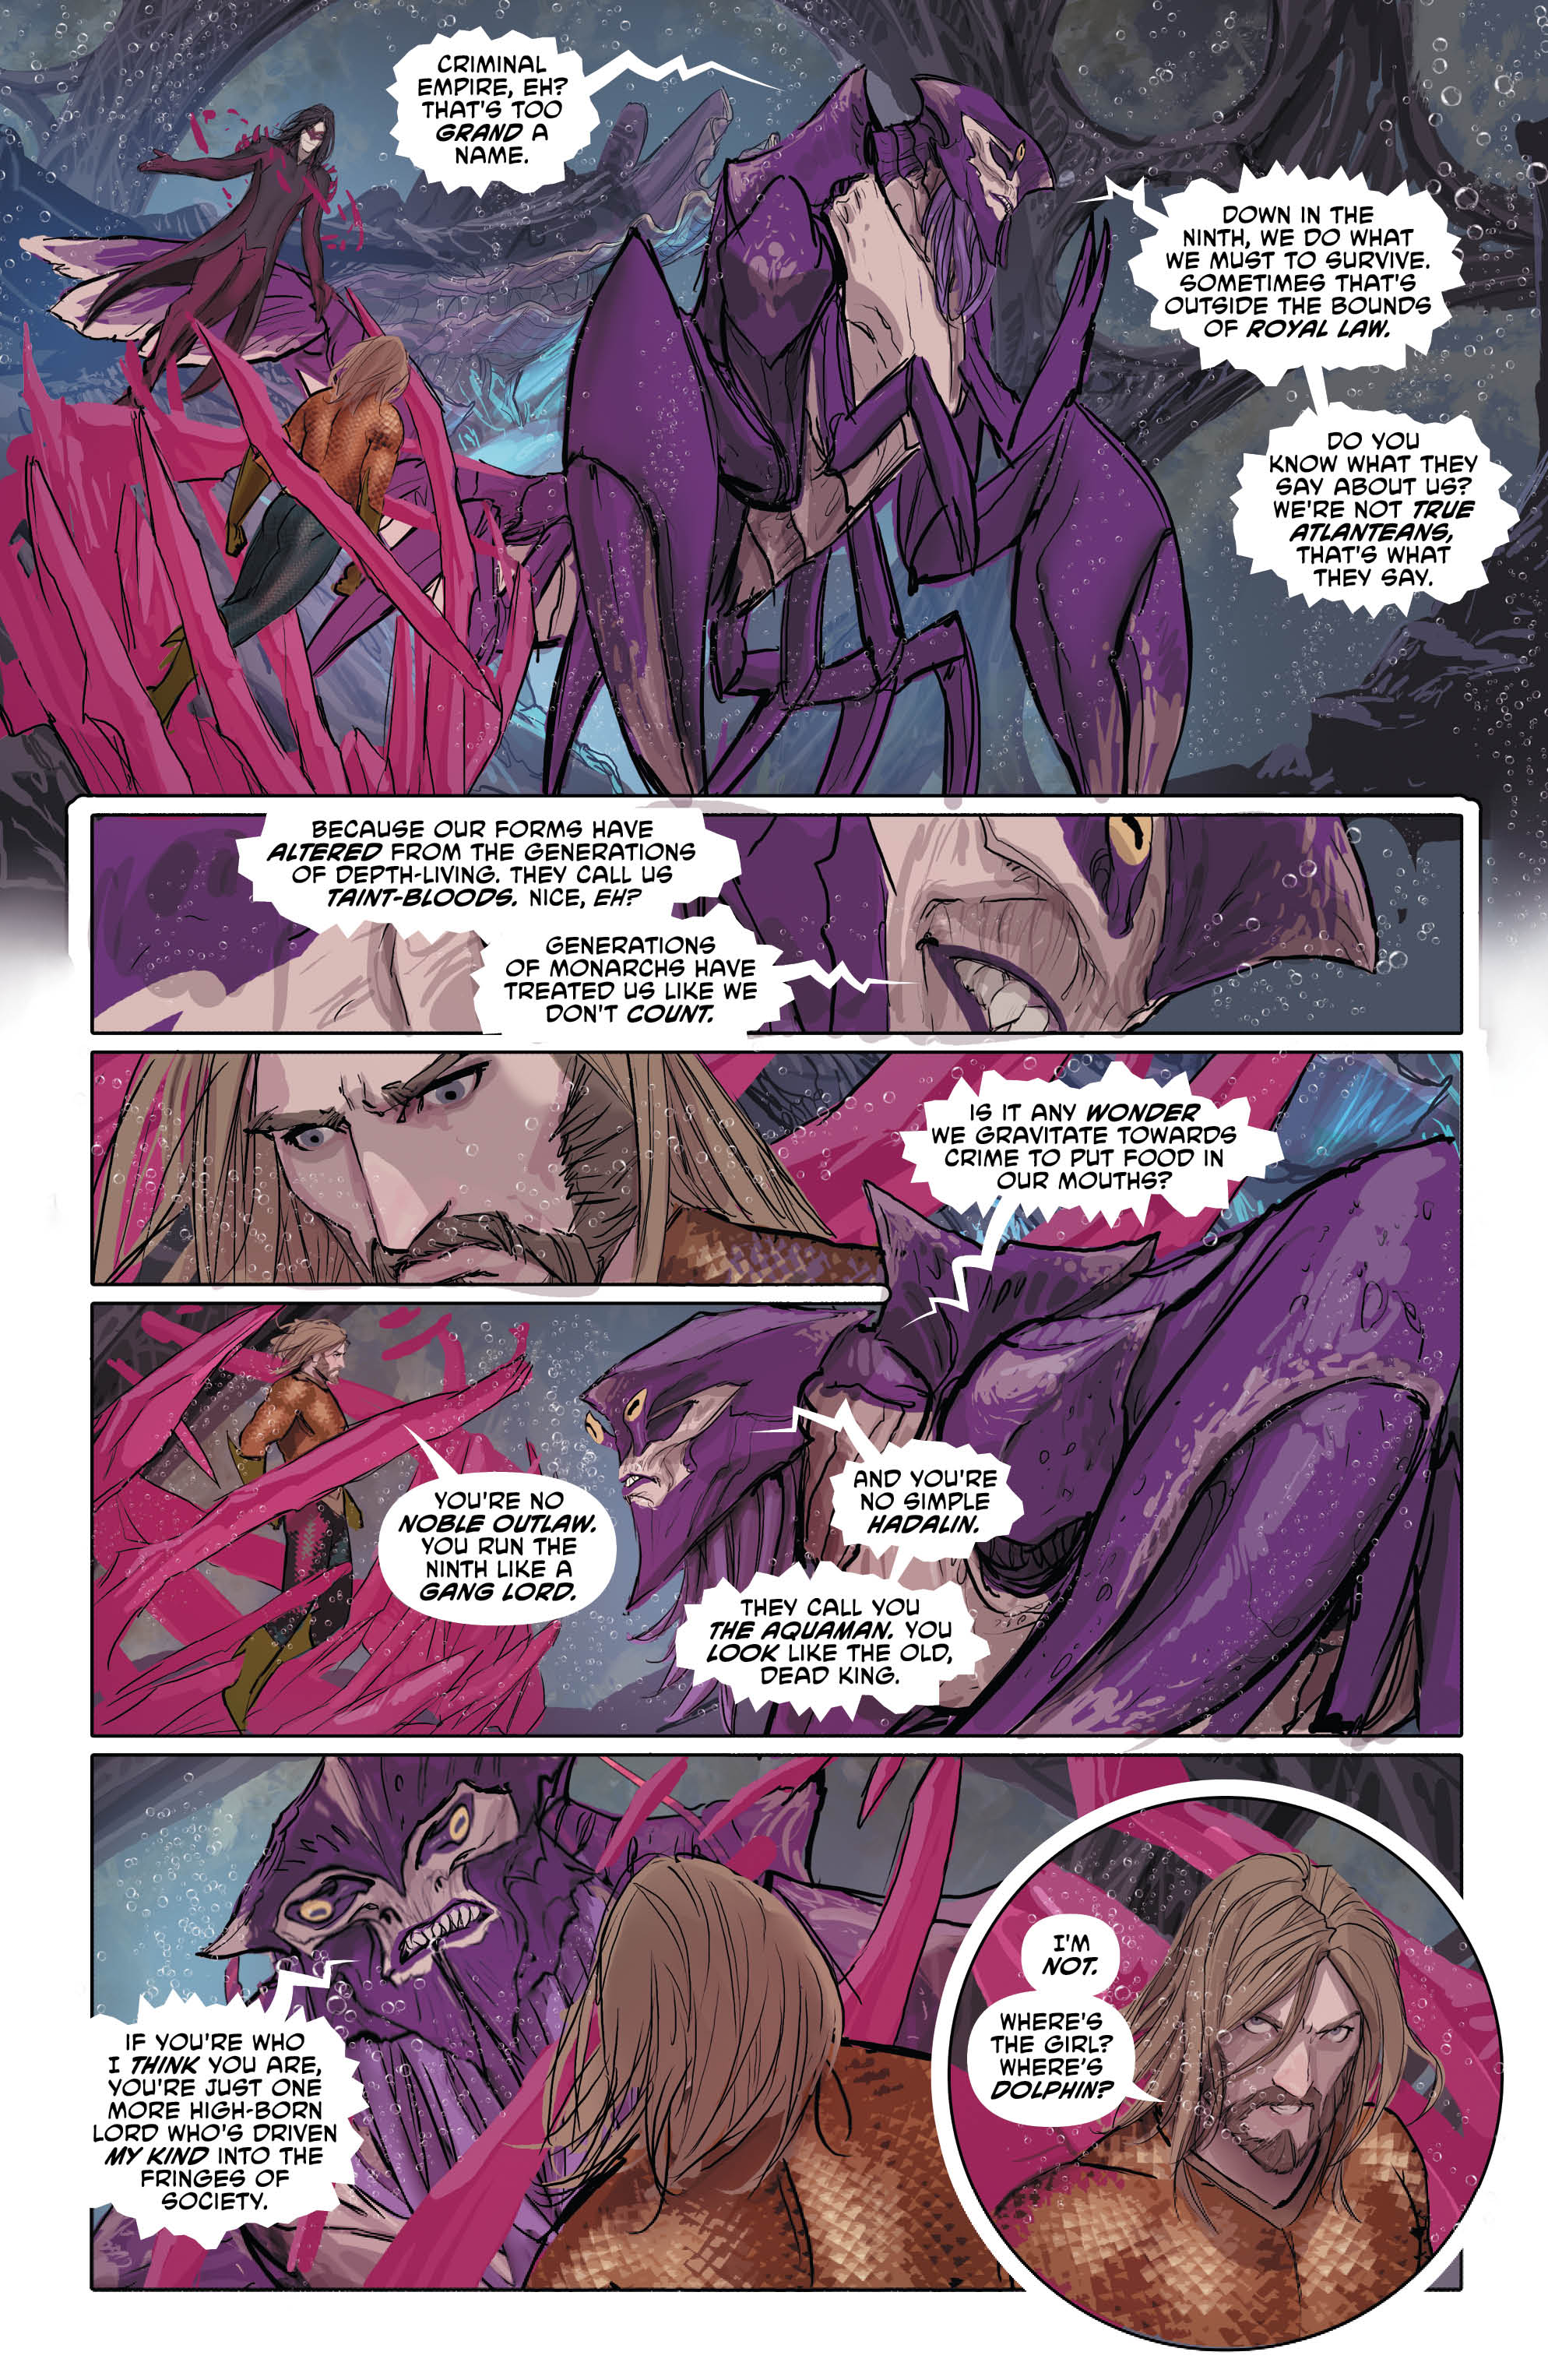 Aquaman Page 4 - DC Comics News